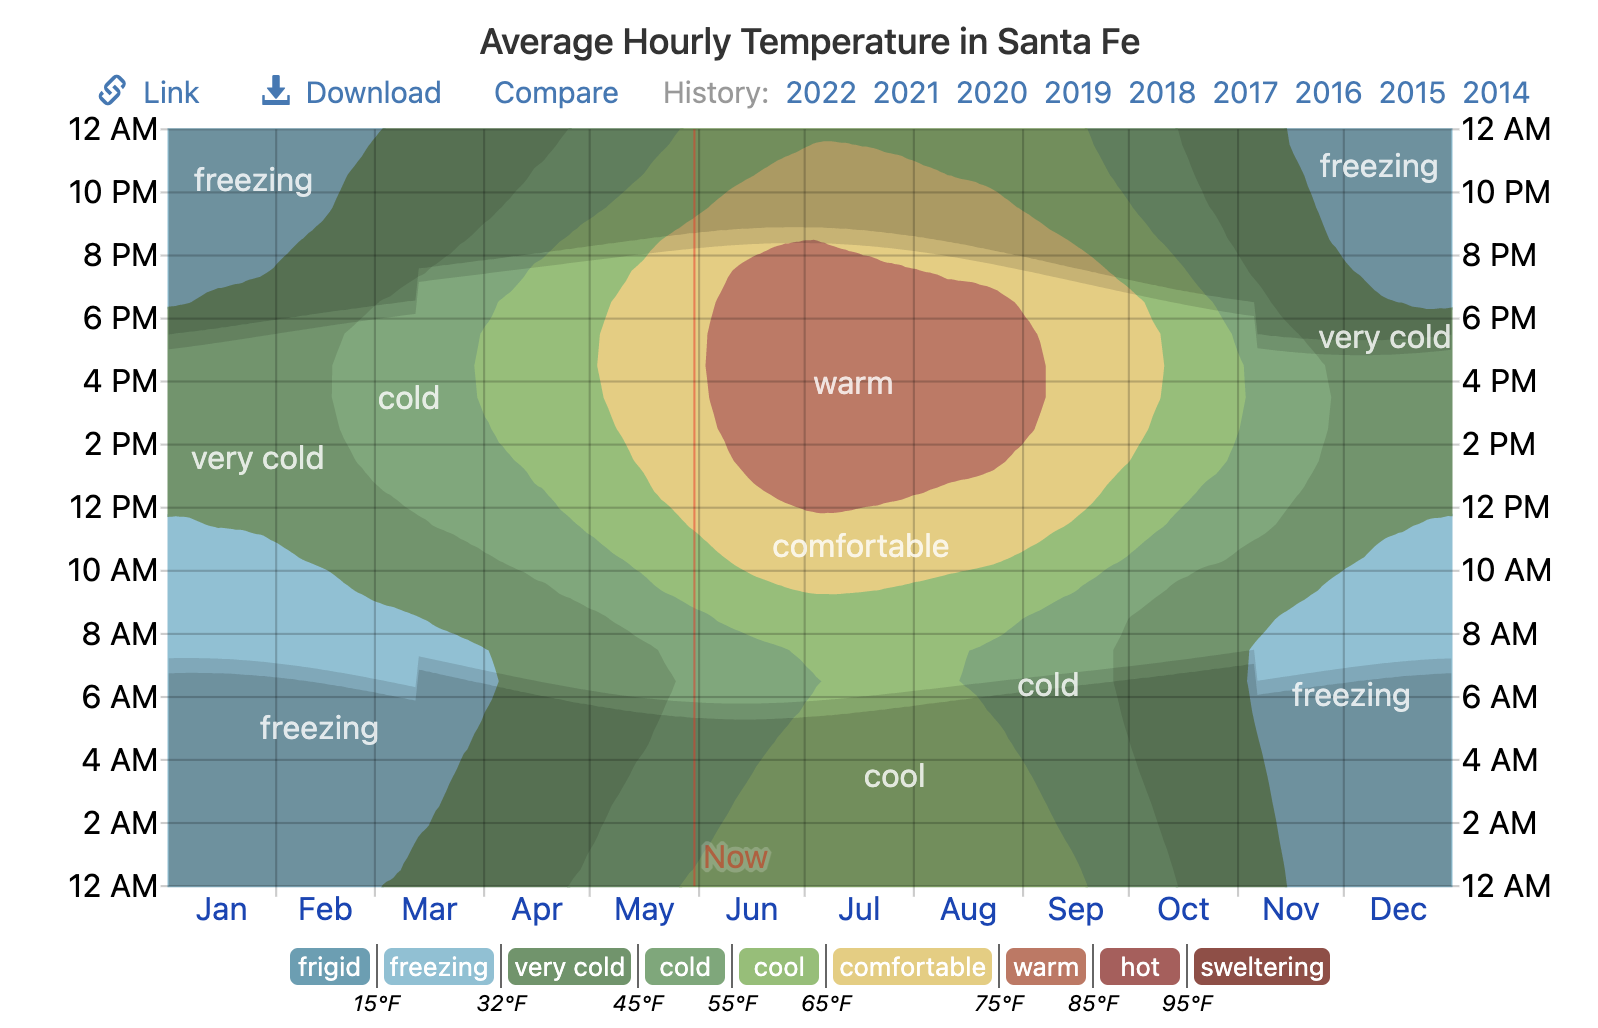 Average annual temperature in Santa Fe